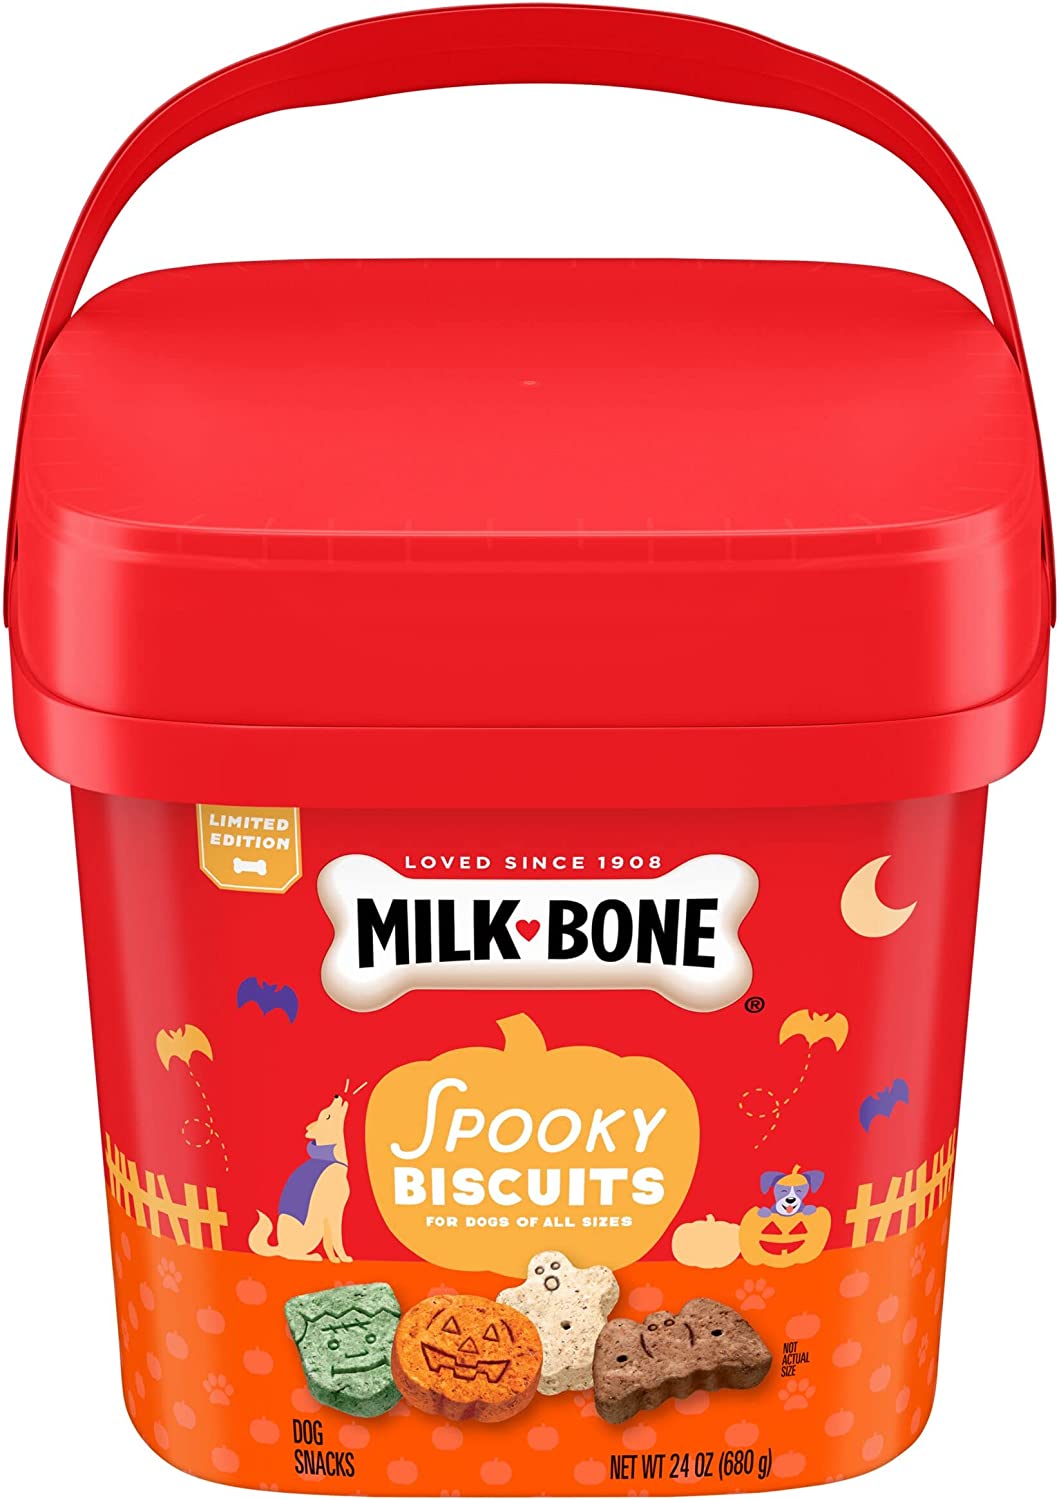 Milk-Bone Spooky Biscuits